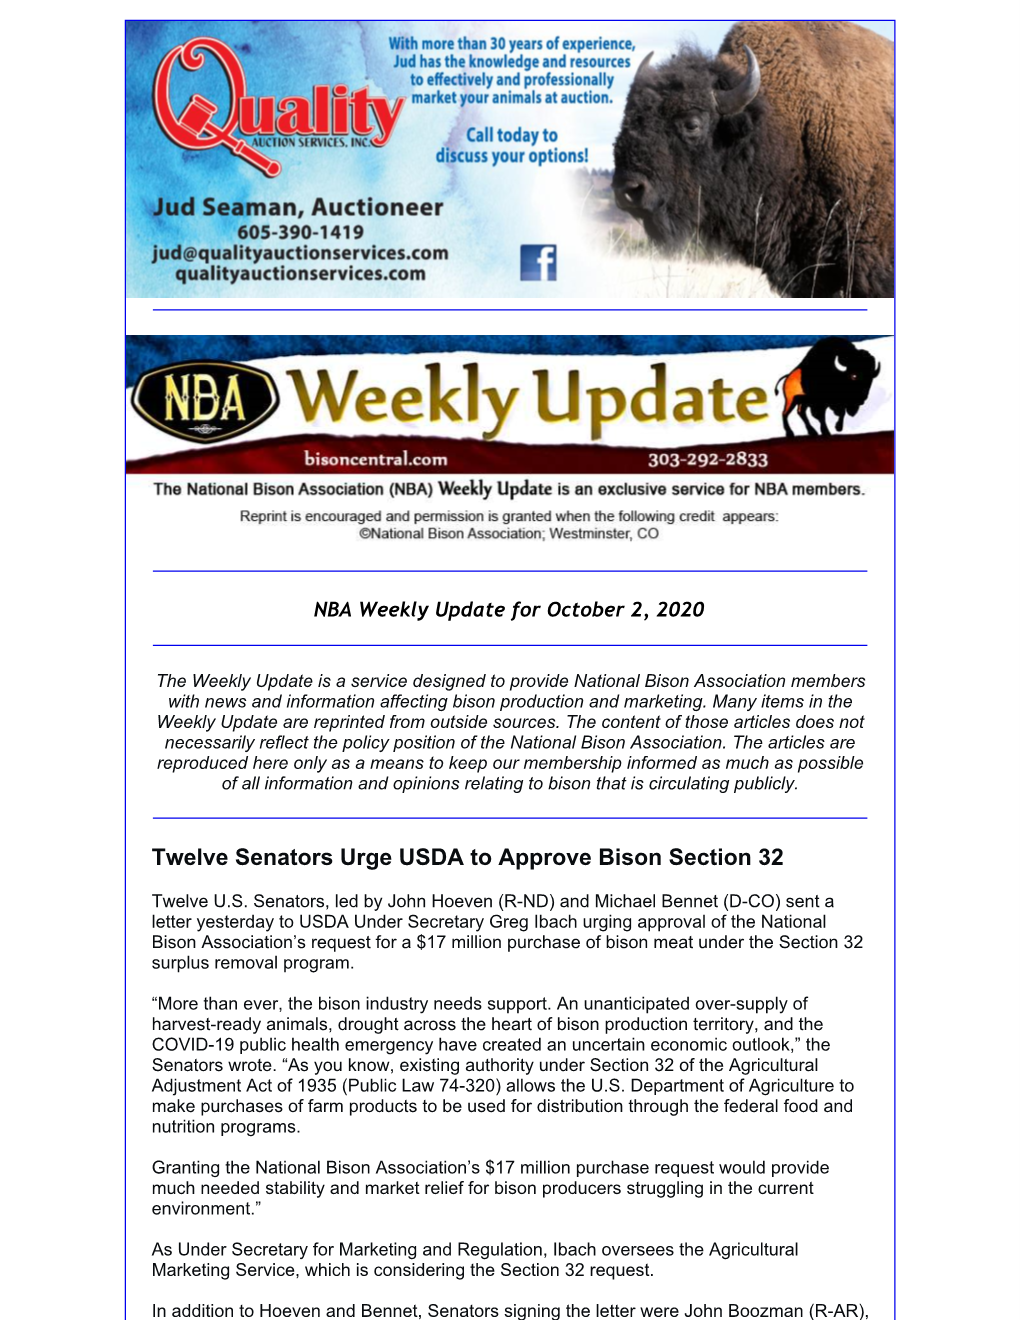 Twelve Senators Urge USDA to Approve Bison Section 32